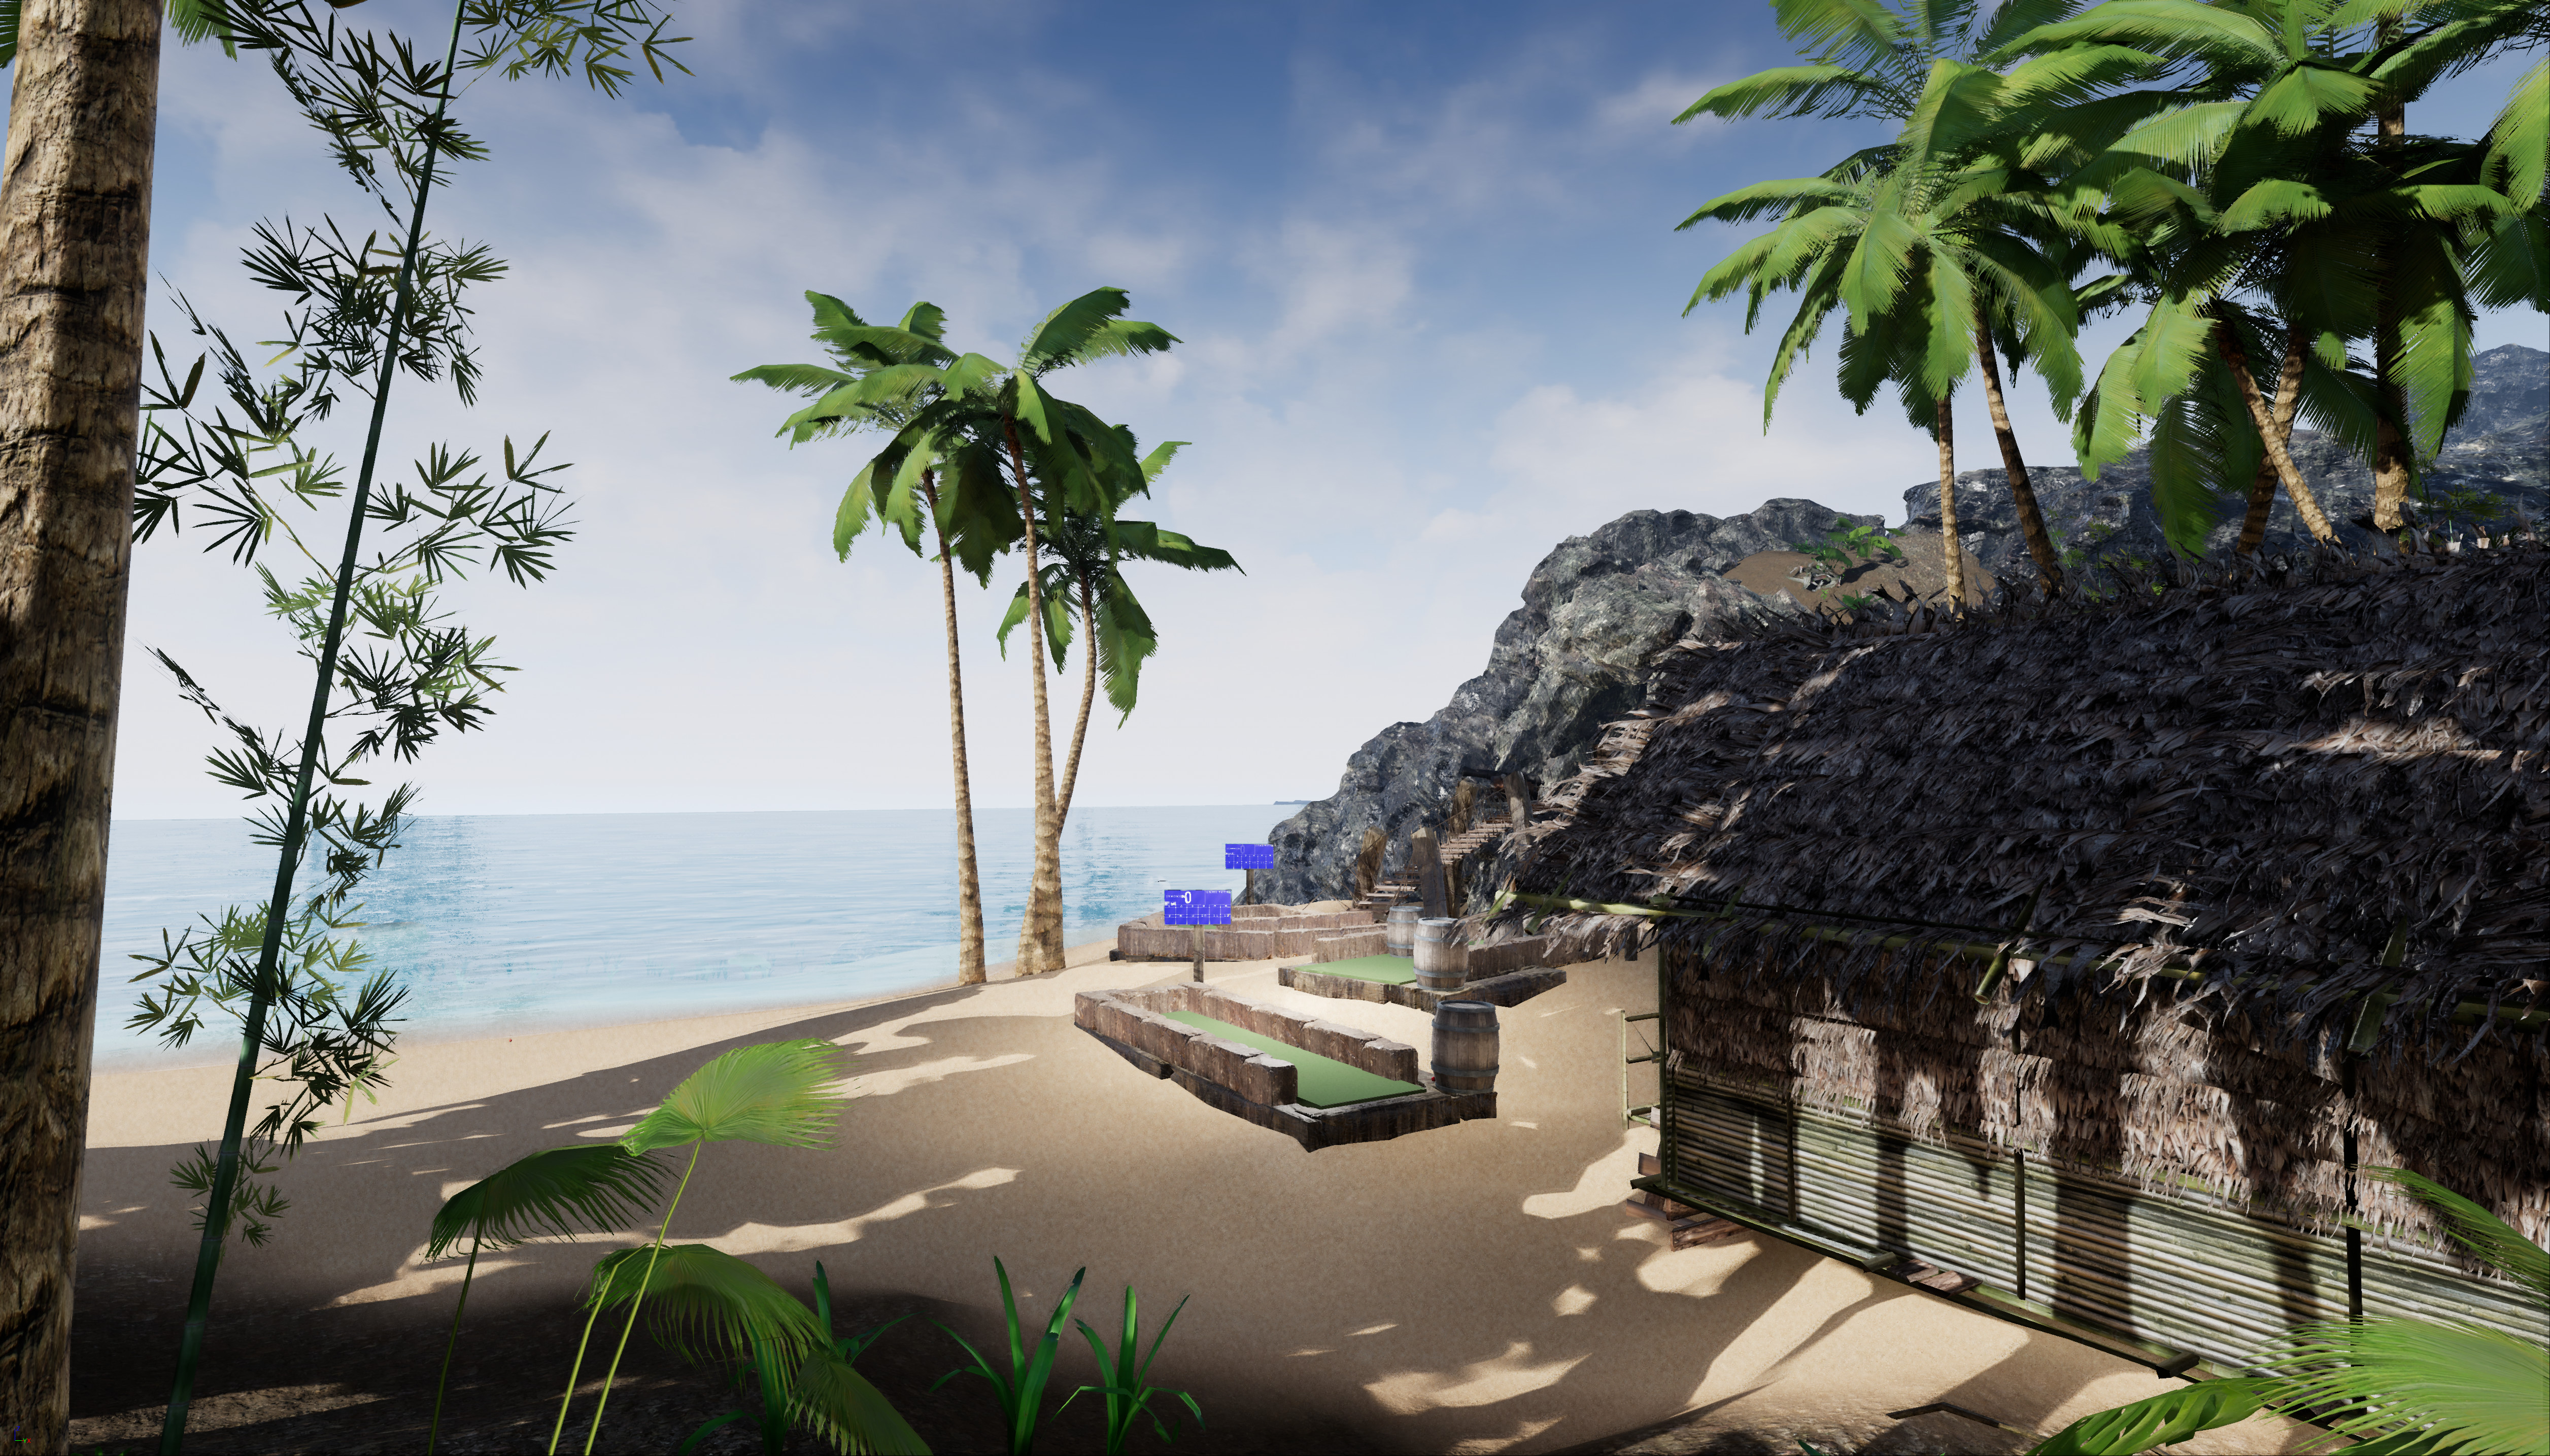 Cove Point Fun Center VR screenshot